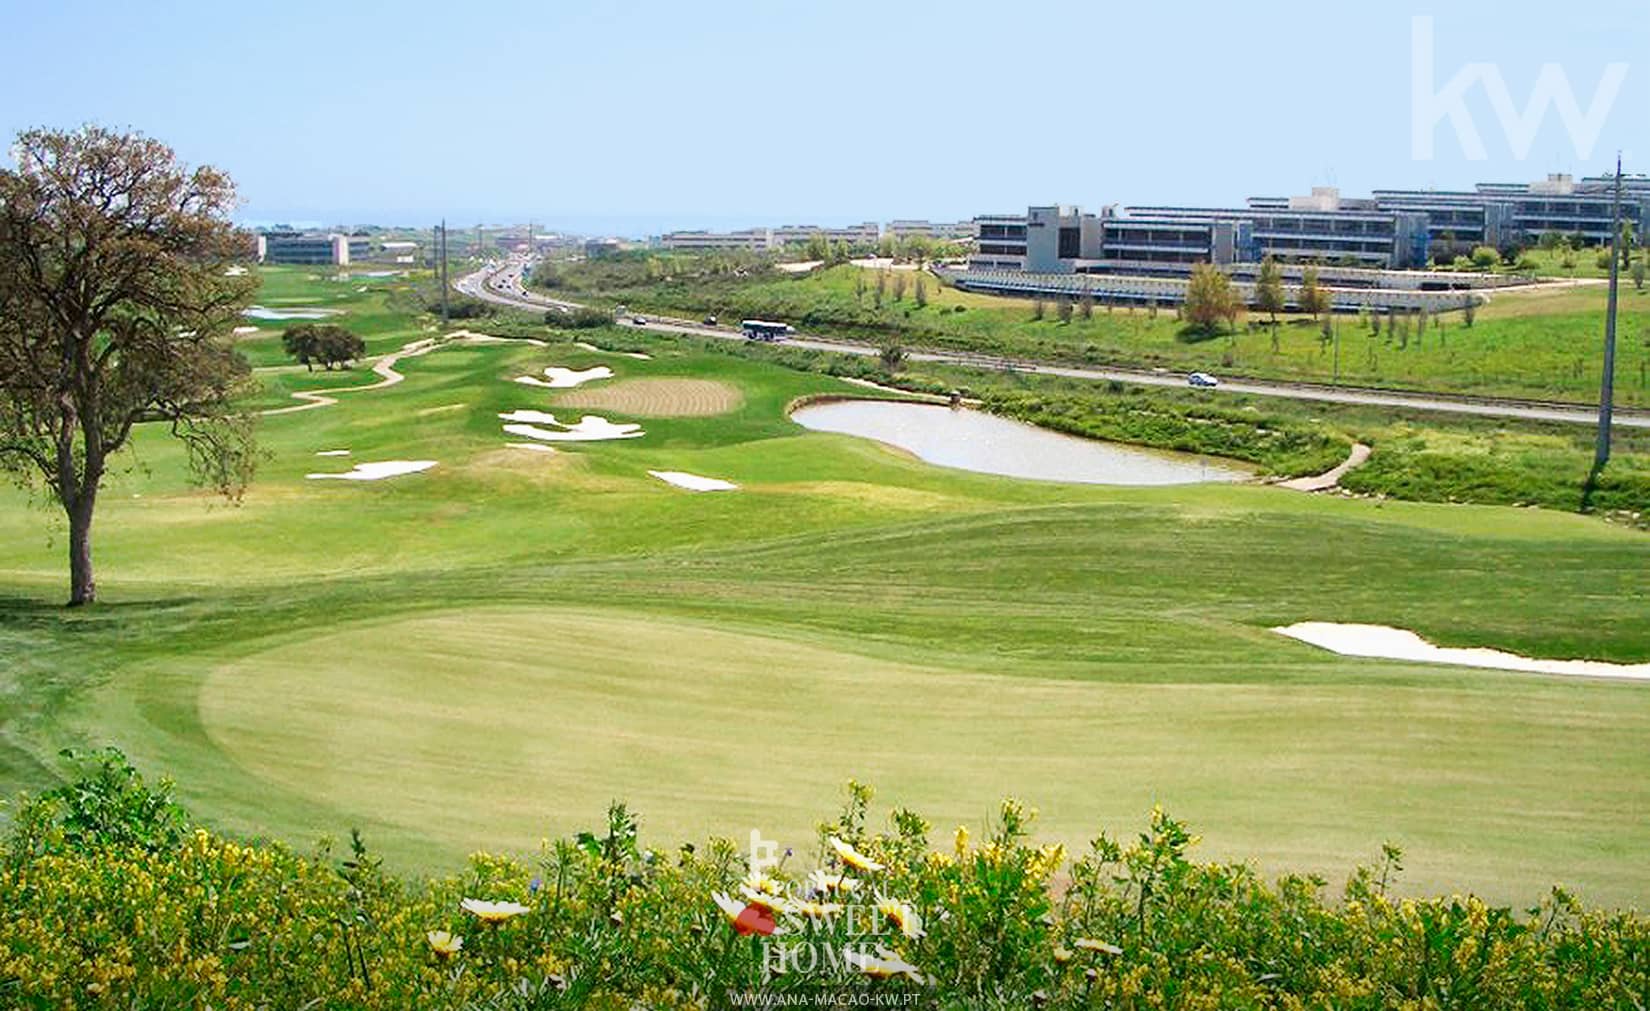 Resort golf course